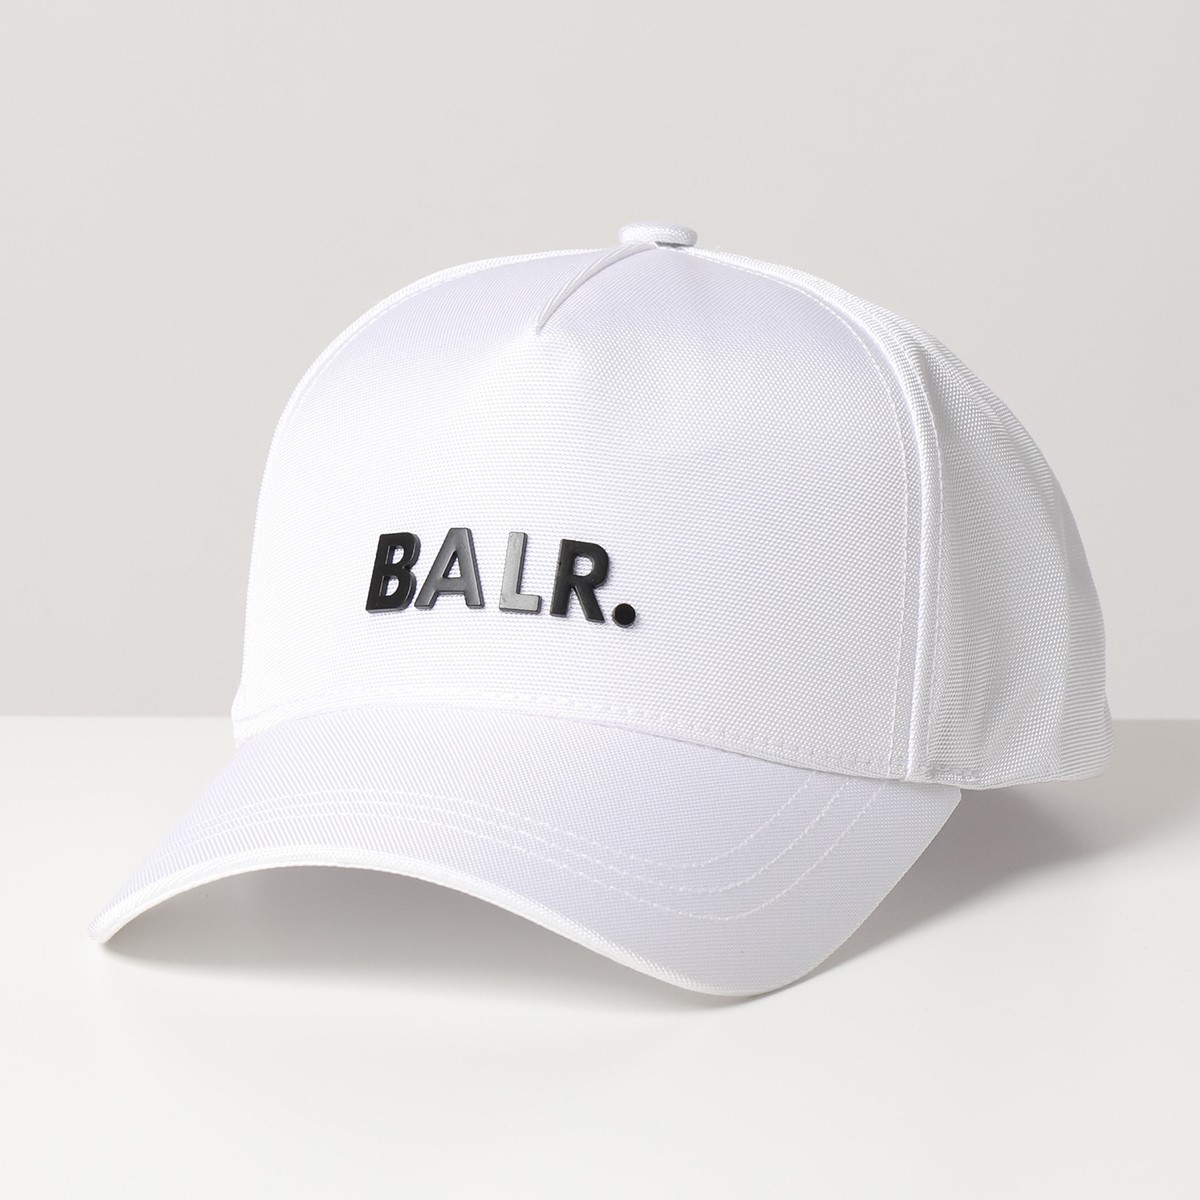 BALR. ボーラー ベースボールキャップ Classic Oxford Cap B1001.4522 メンズ 帽子 ロゴメタルパーツ カラー2色